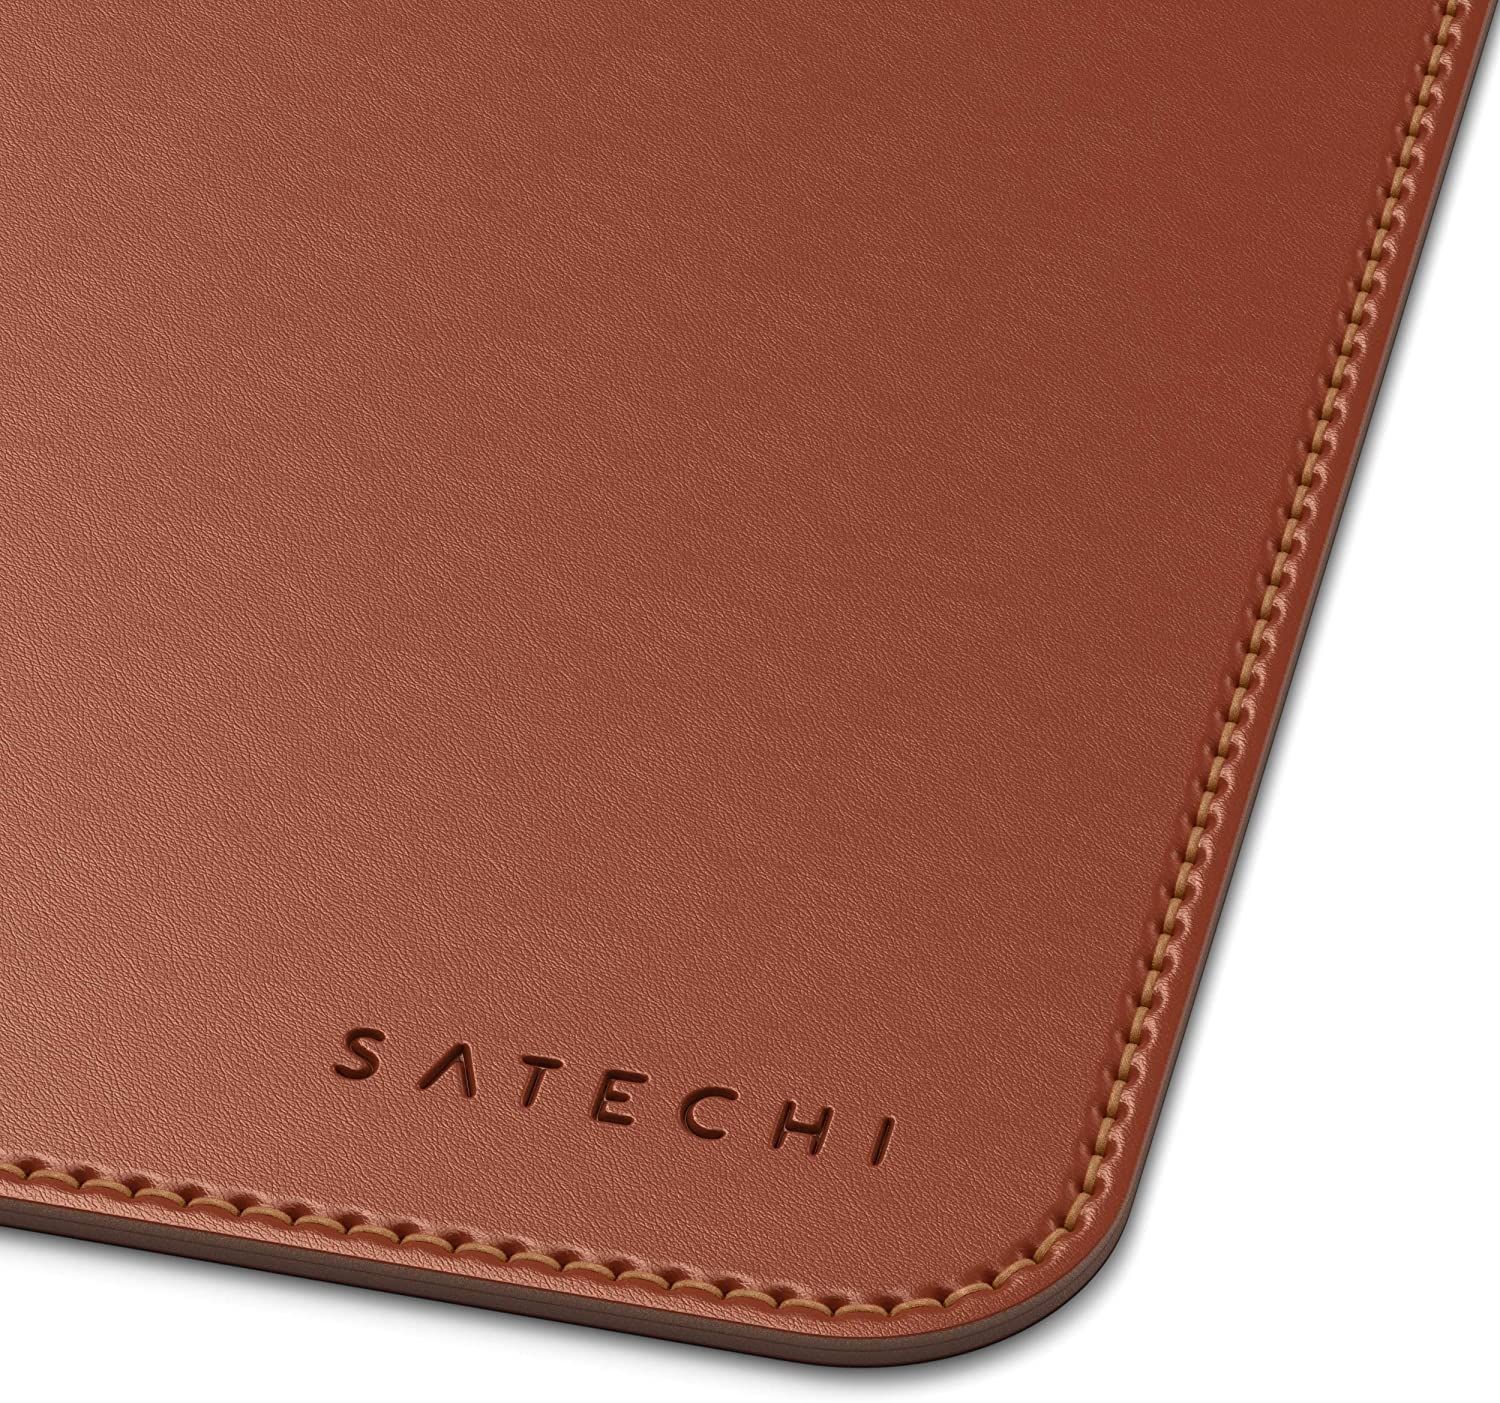 satechi-exo-leather-mousepad-brown-3.jpg